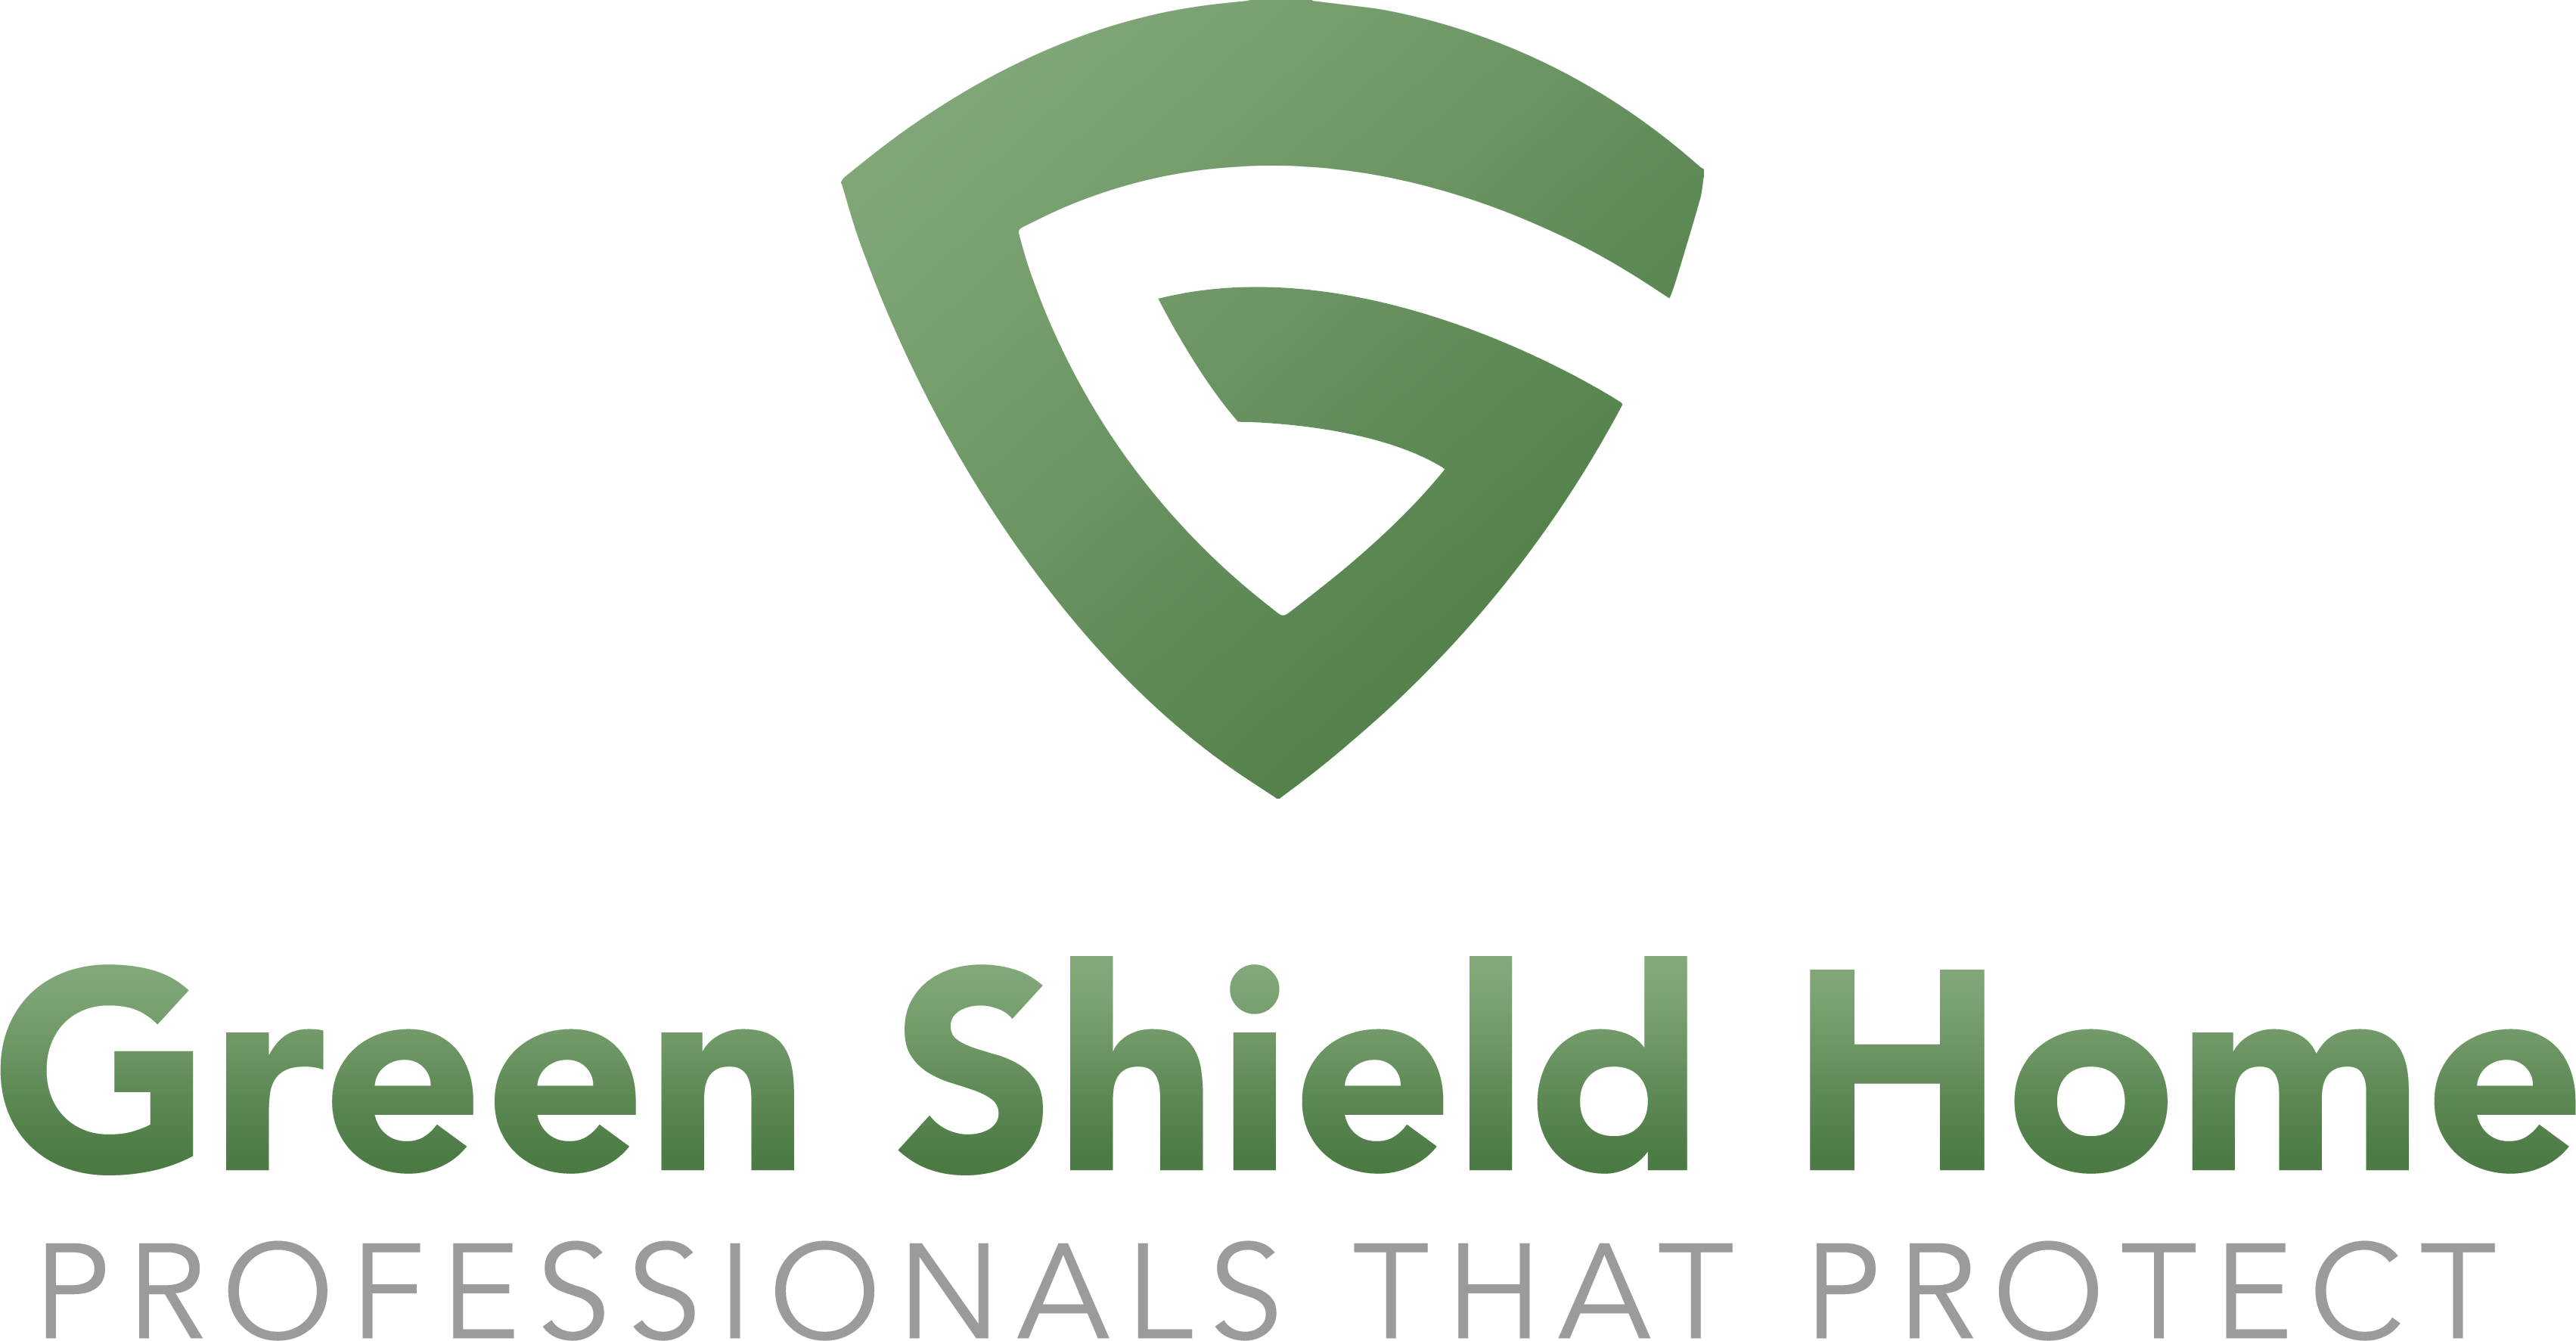 Green Shield Home, LLC Logo